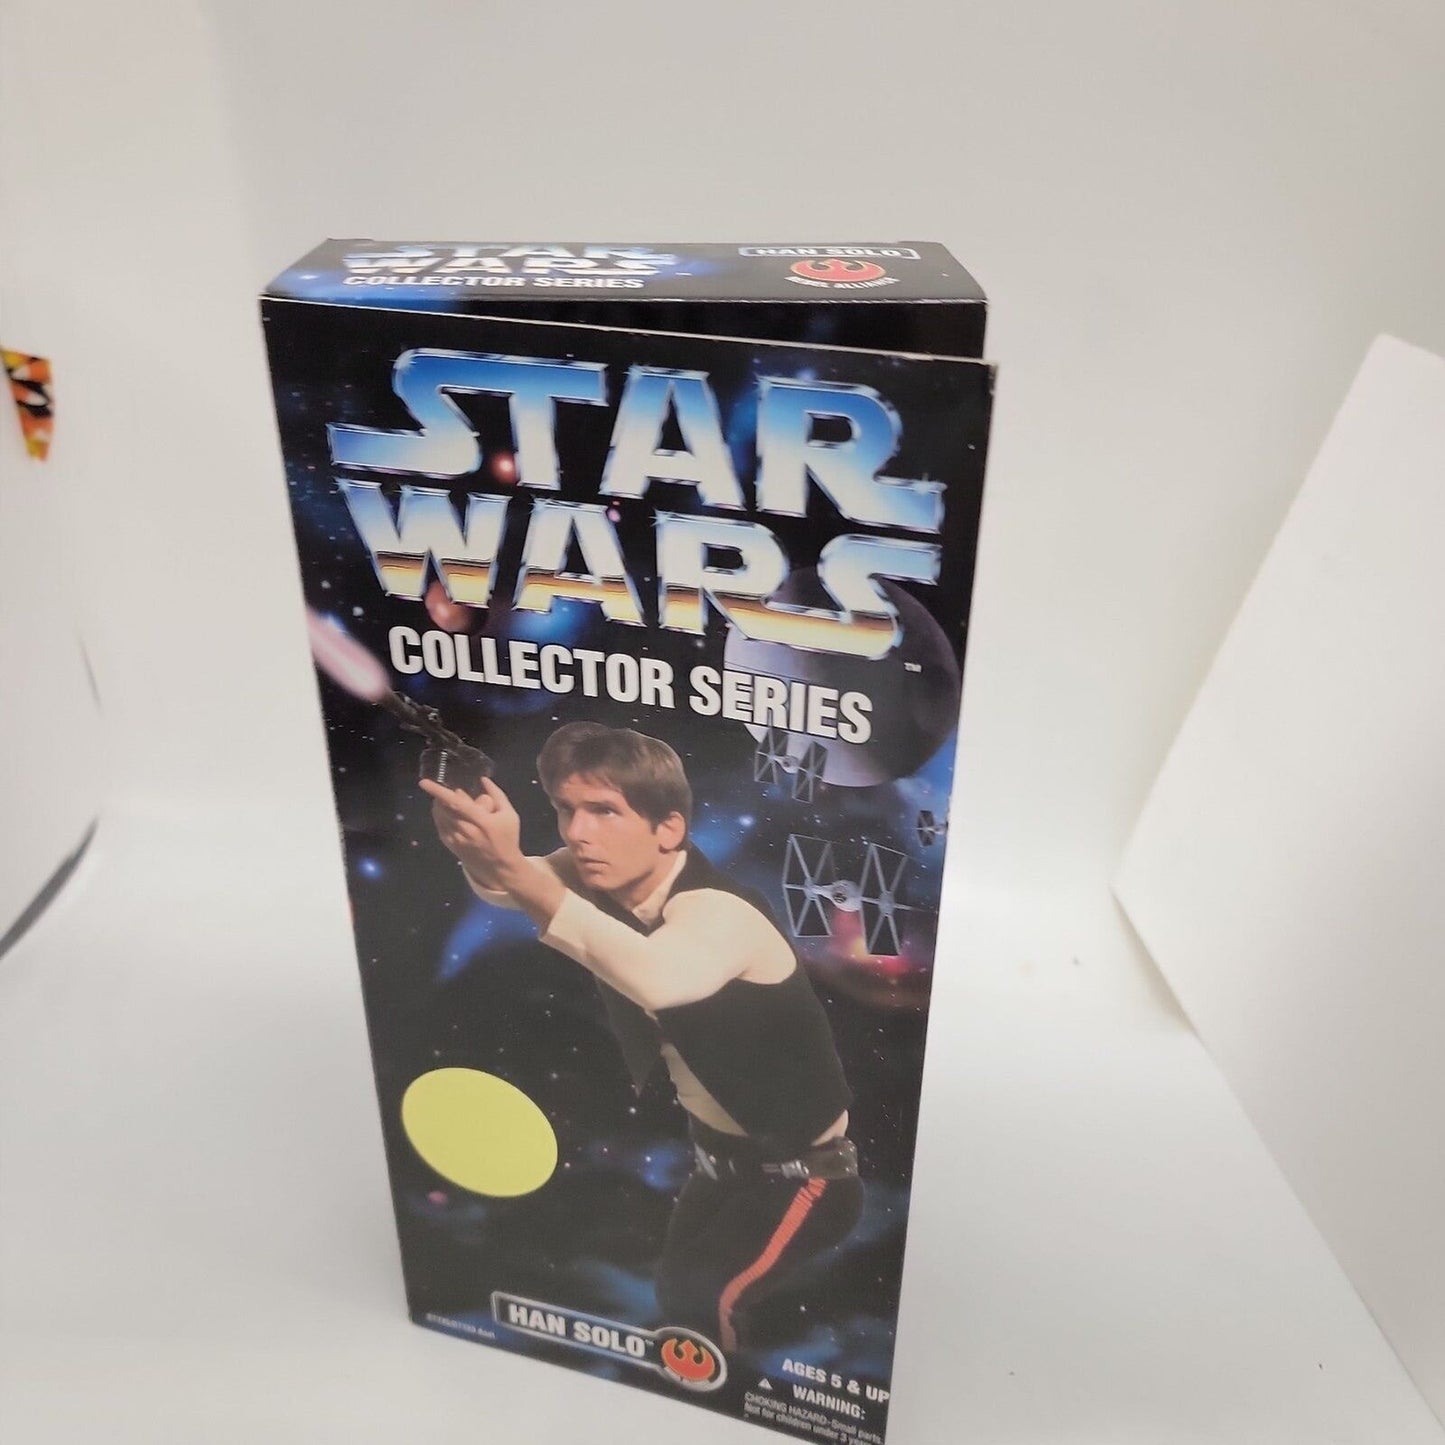 Star Wars Collector Series Han Solo